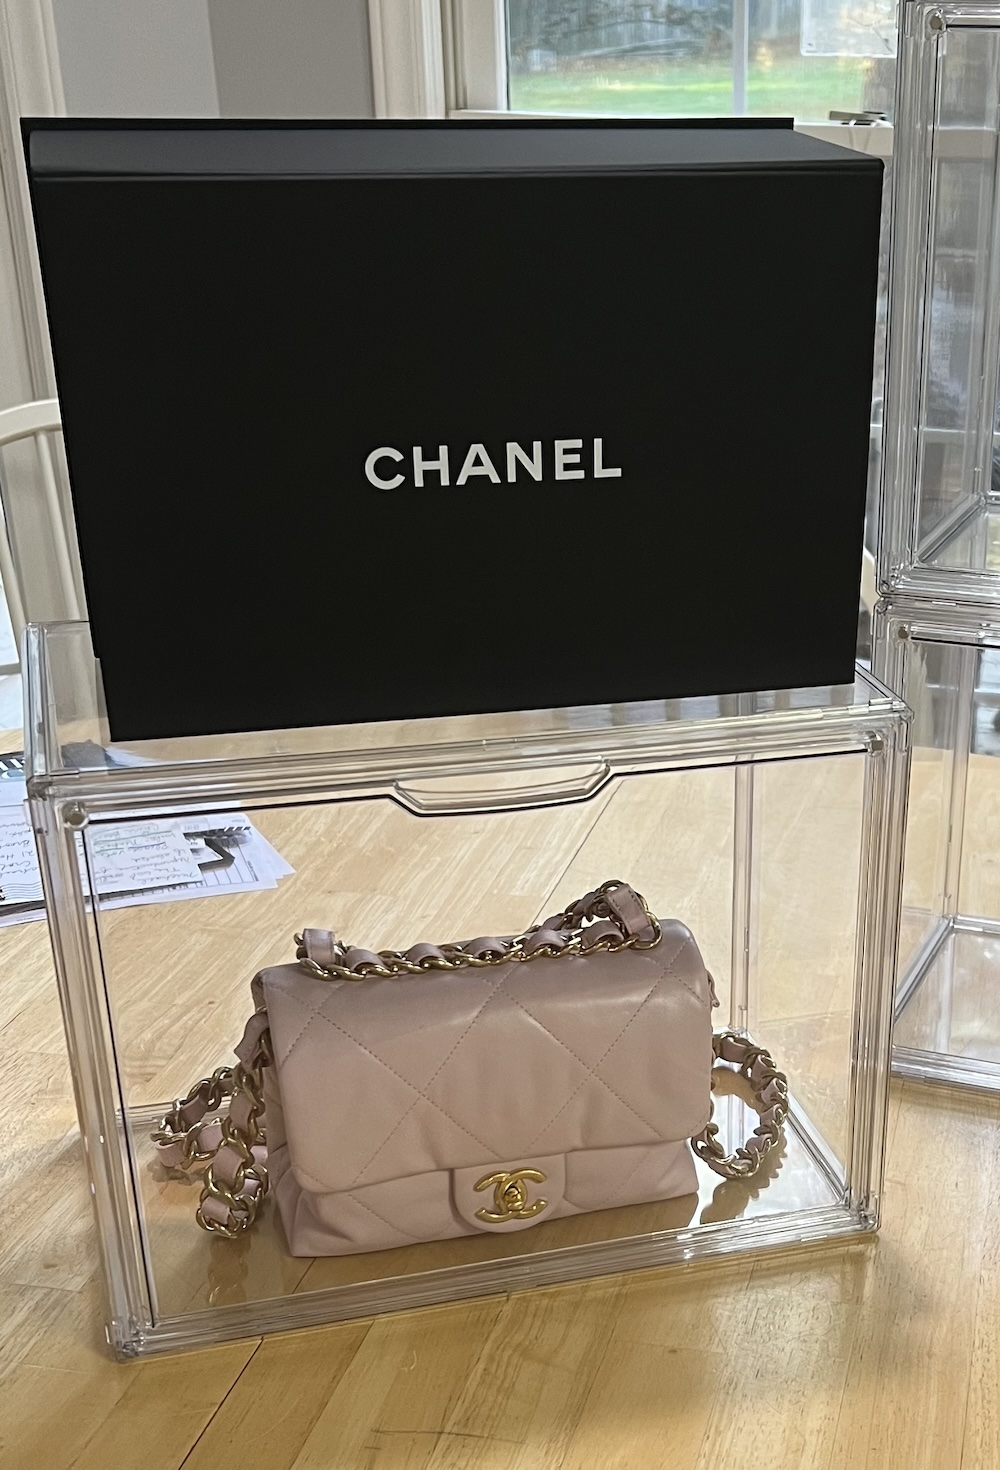 Chanel bag in acrylic case